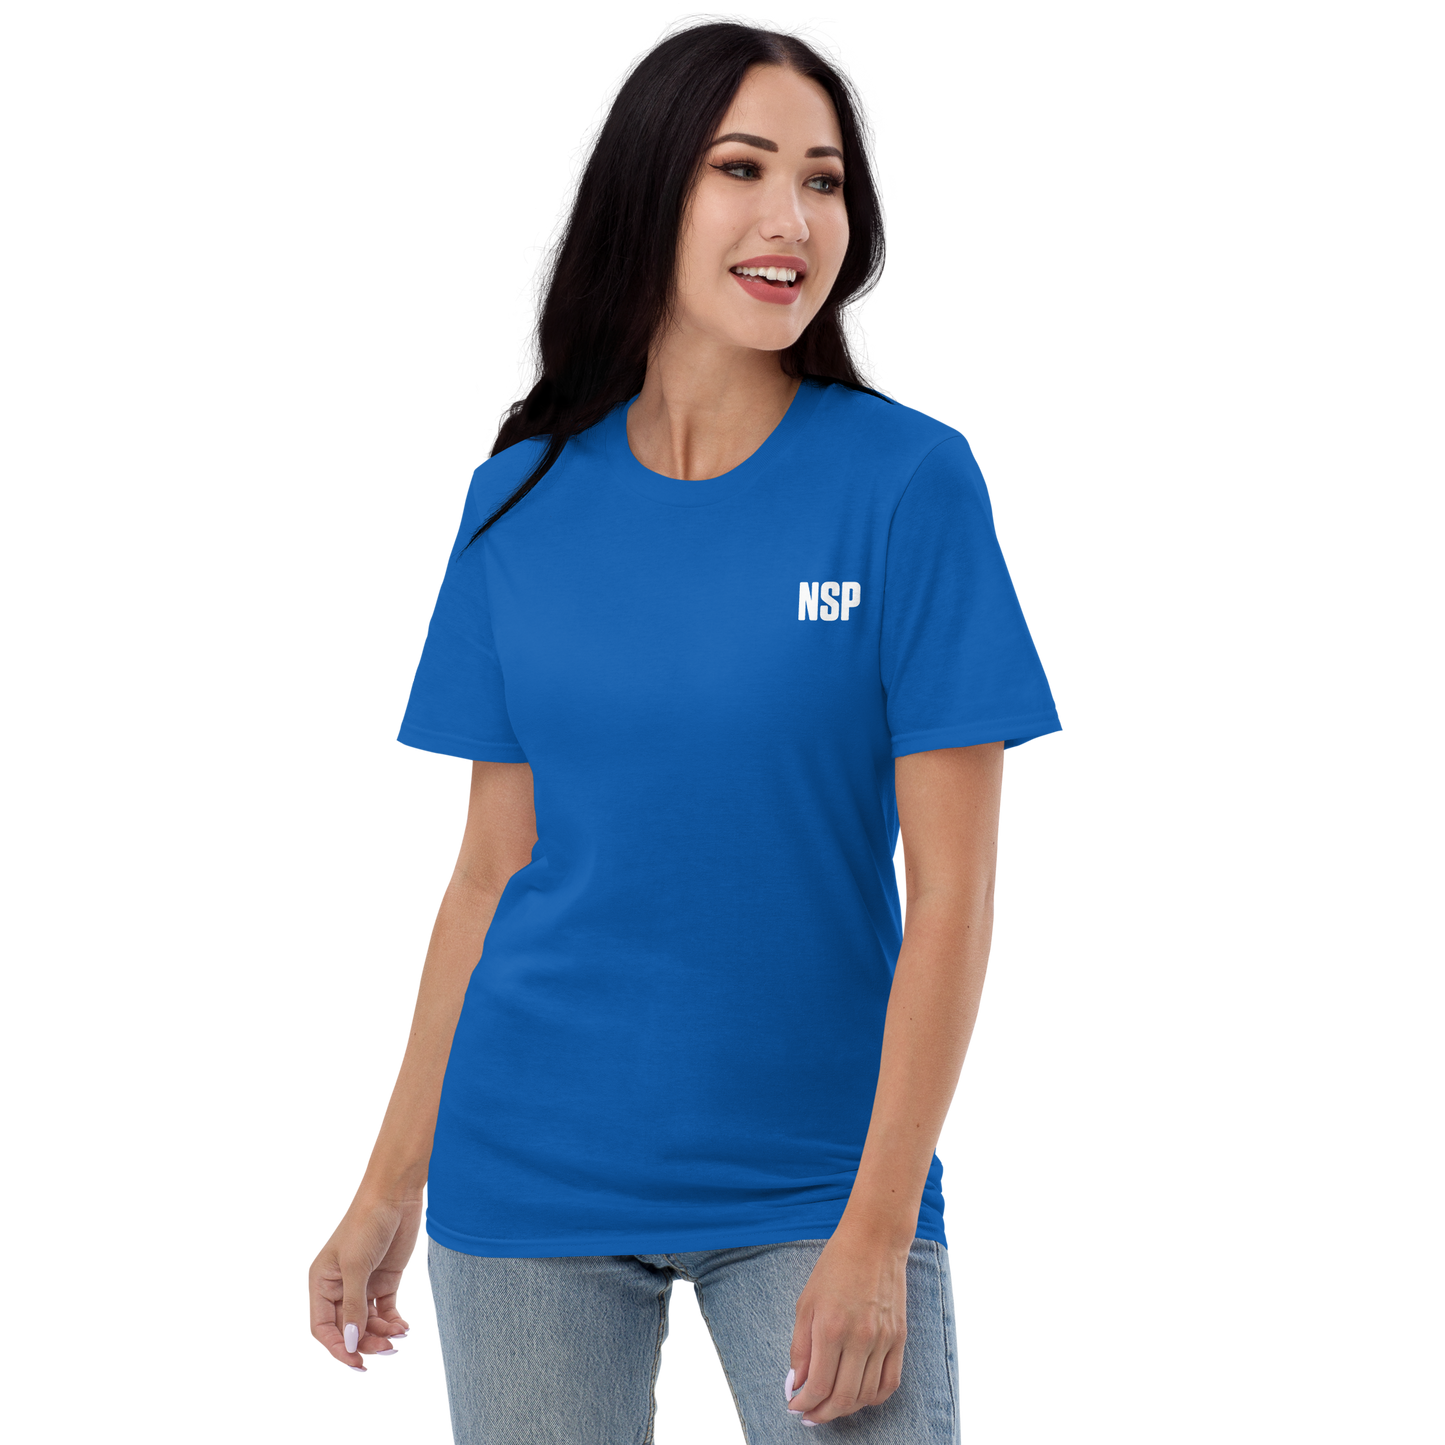 Women's Dark Short-Sleeve T-Shirt  NSP USA Royal Blue 